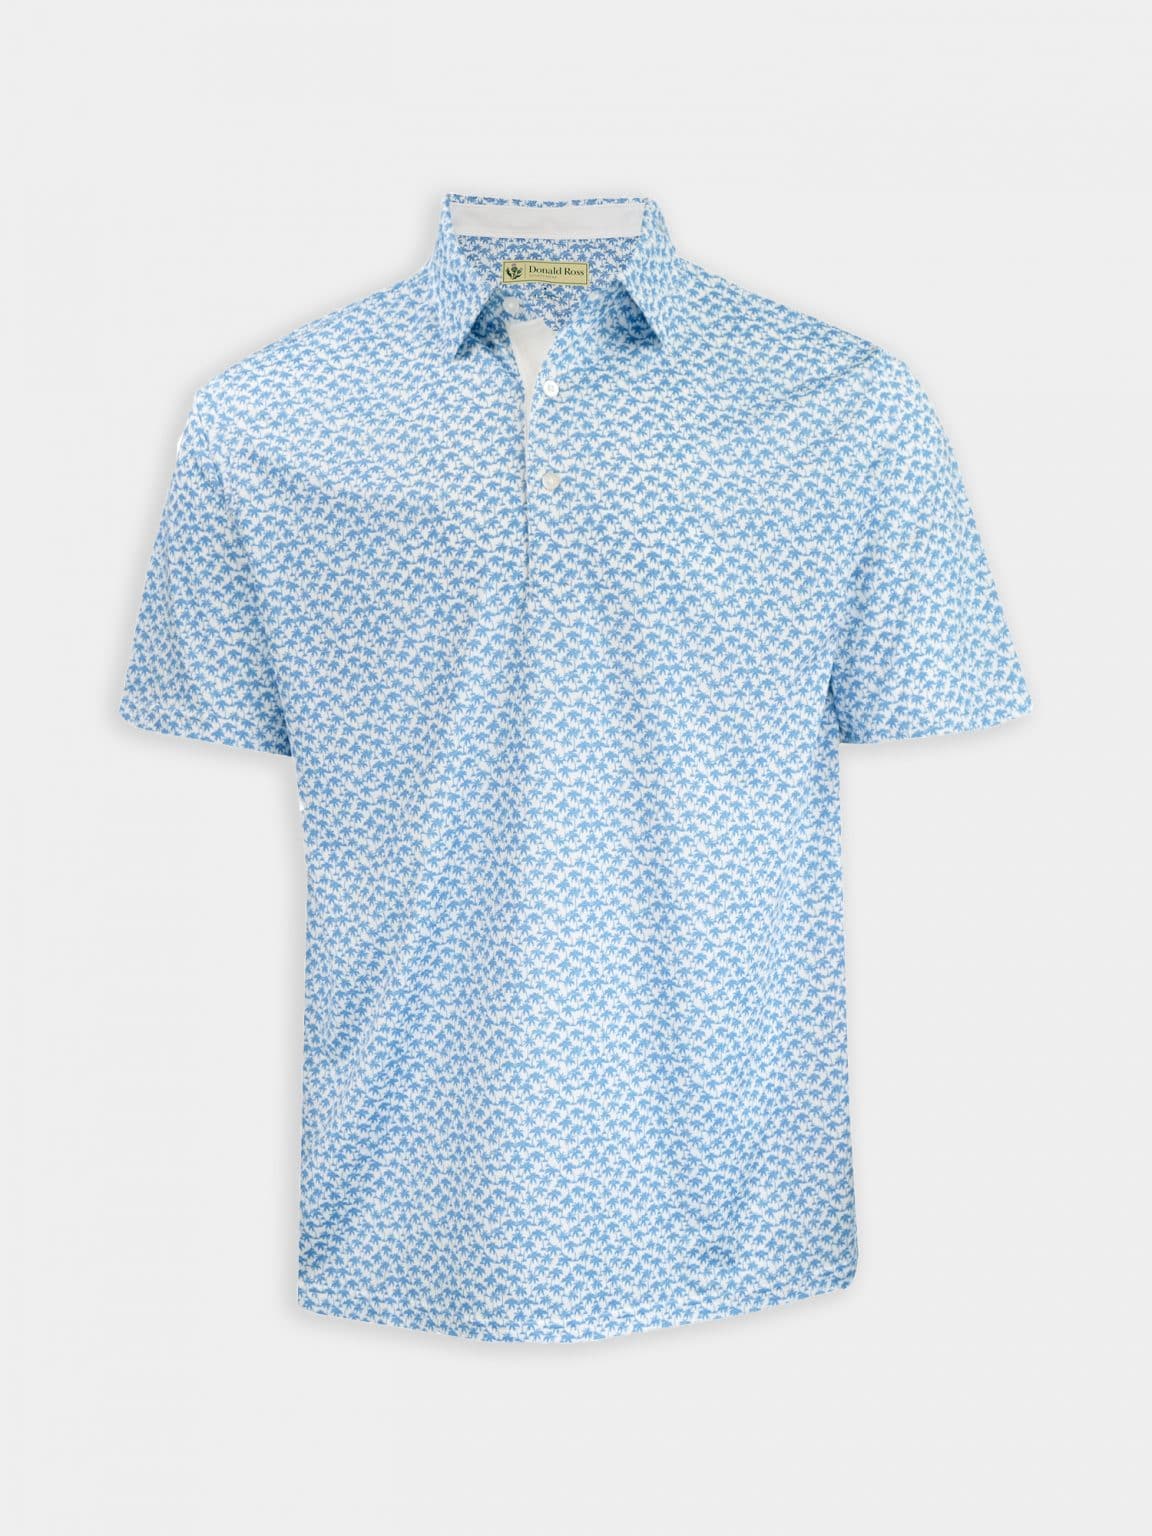 Palm Tree Print Golf Shirt | Collared Performance Polo | Short Sleeve